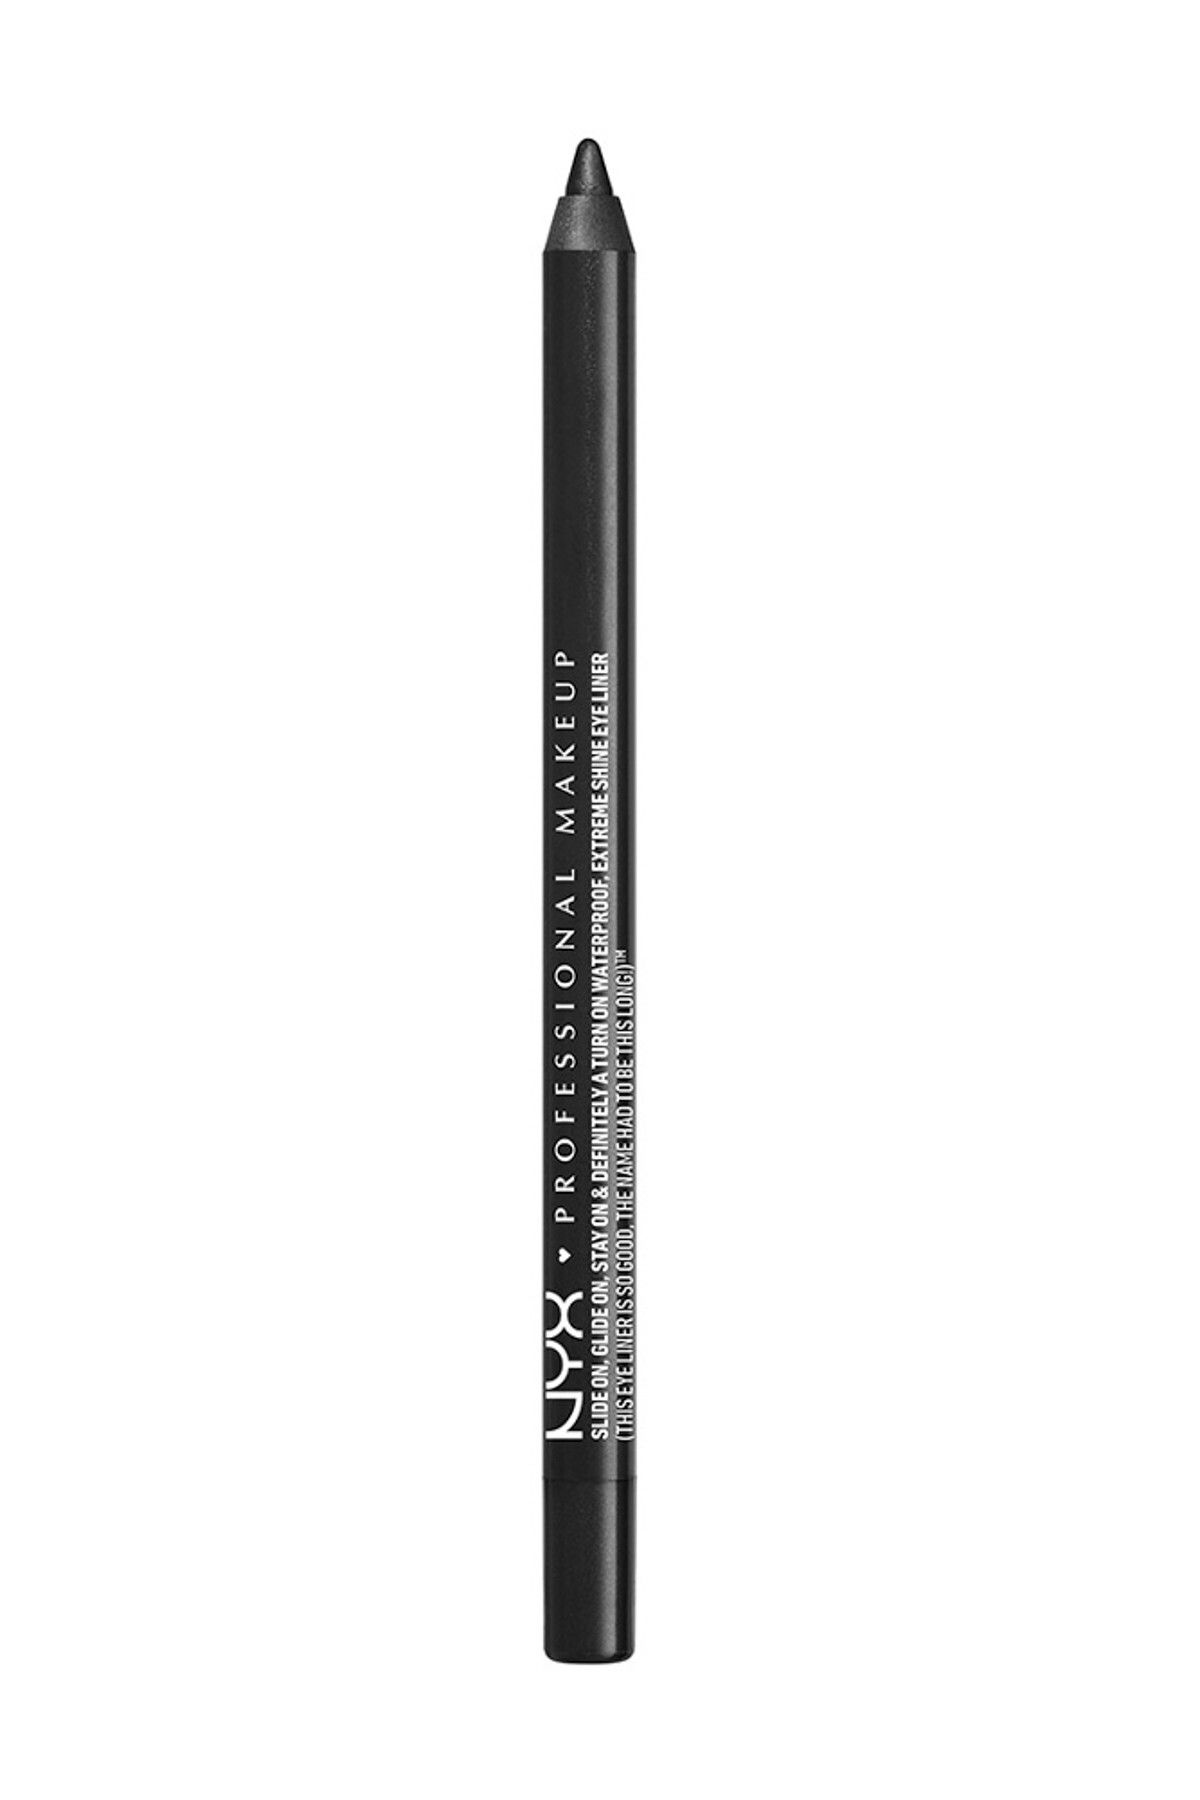 NYX Professional Makeup Siyah Göz Kalemi - Slide on Eye Pencil Black Sparkle 6 g 800897141172